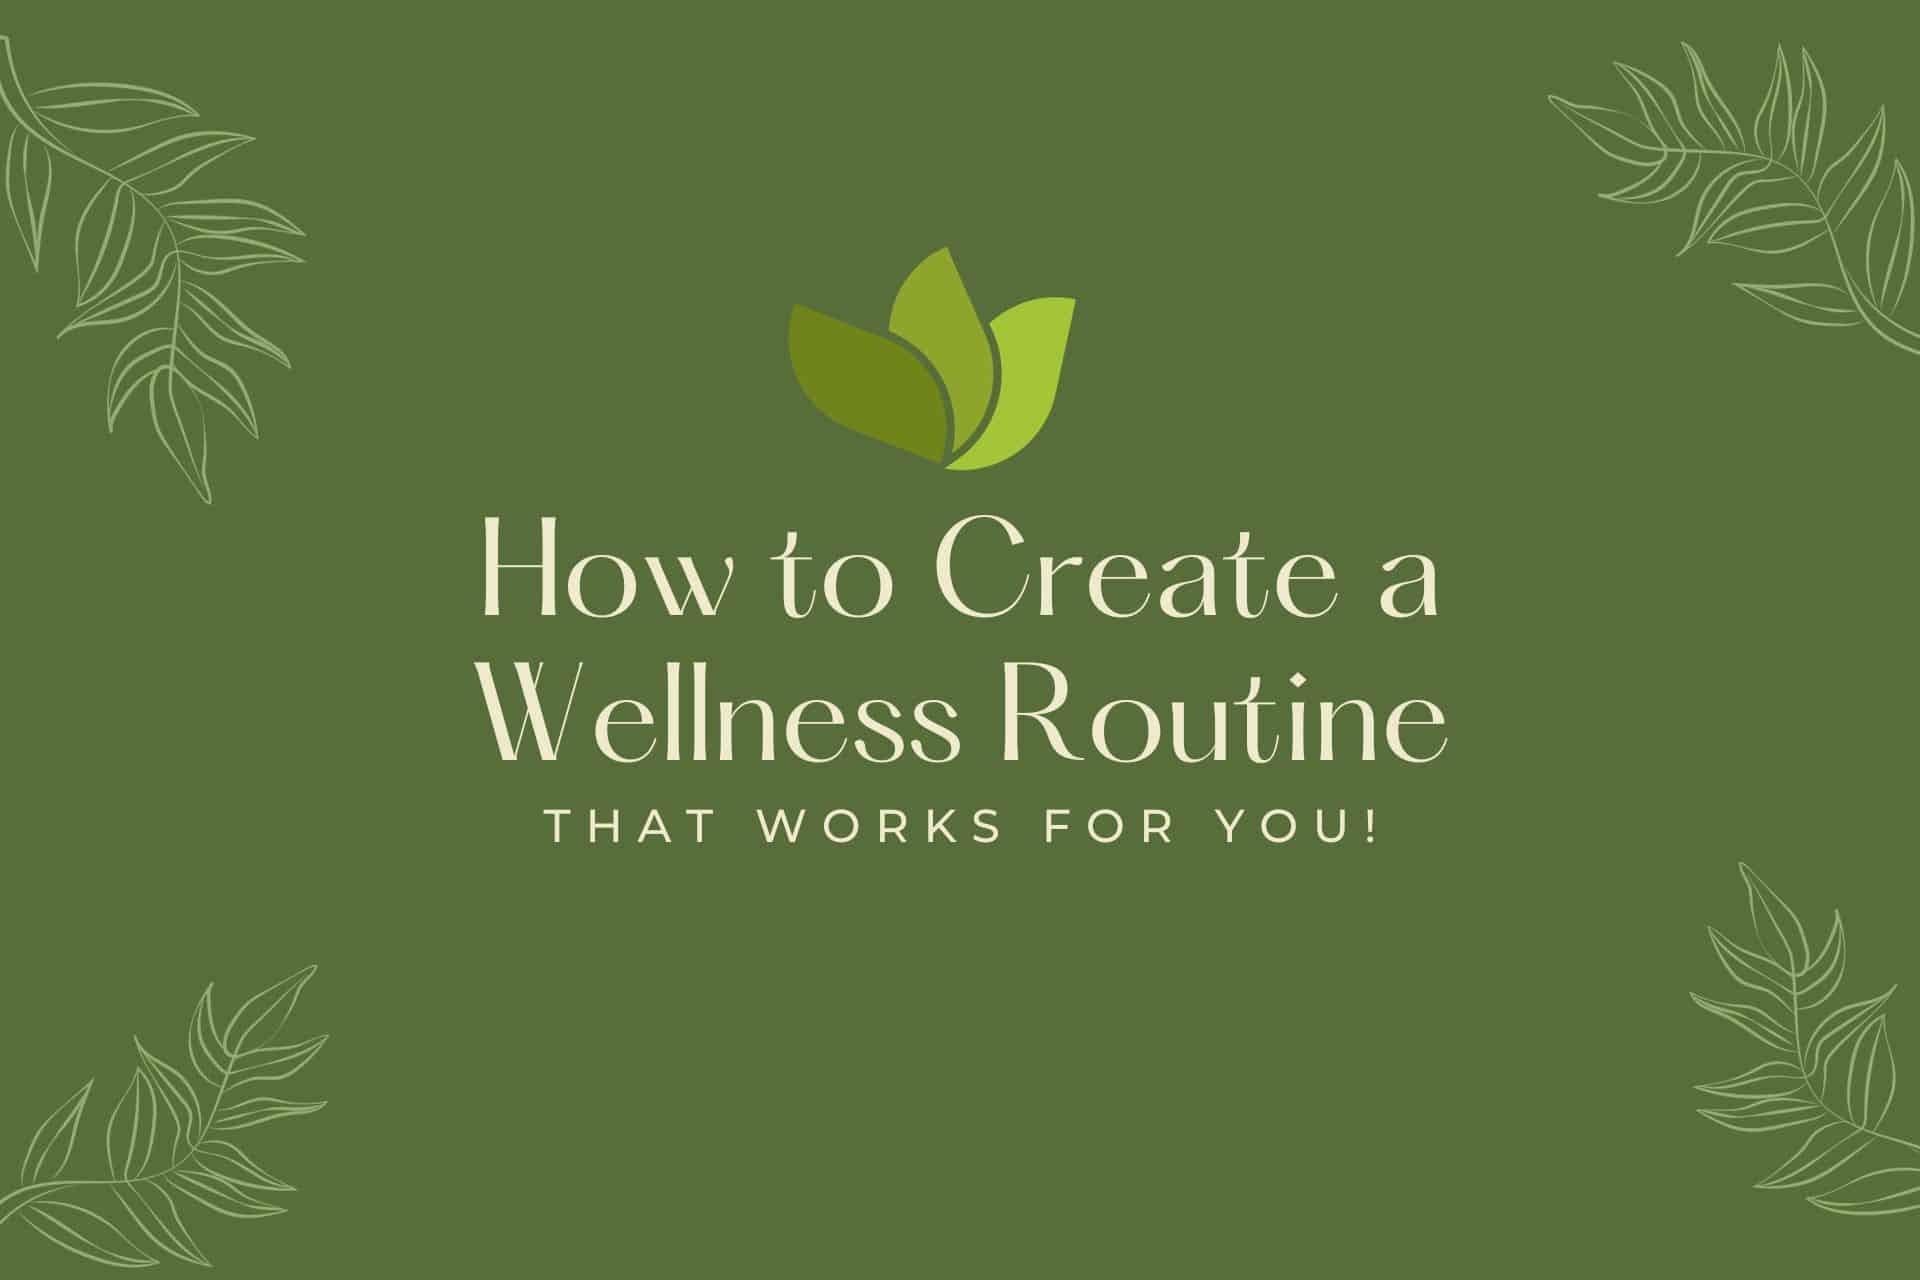 How to create a wellness routine